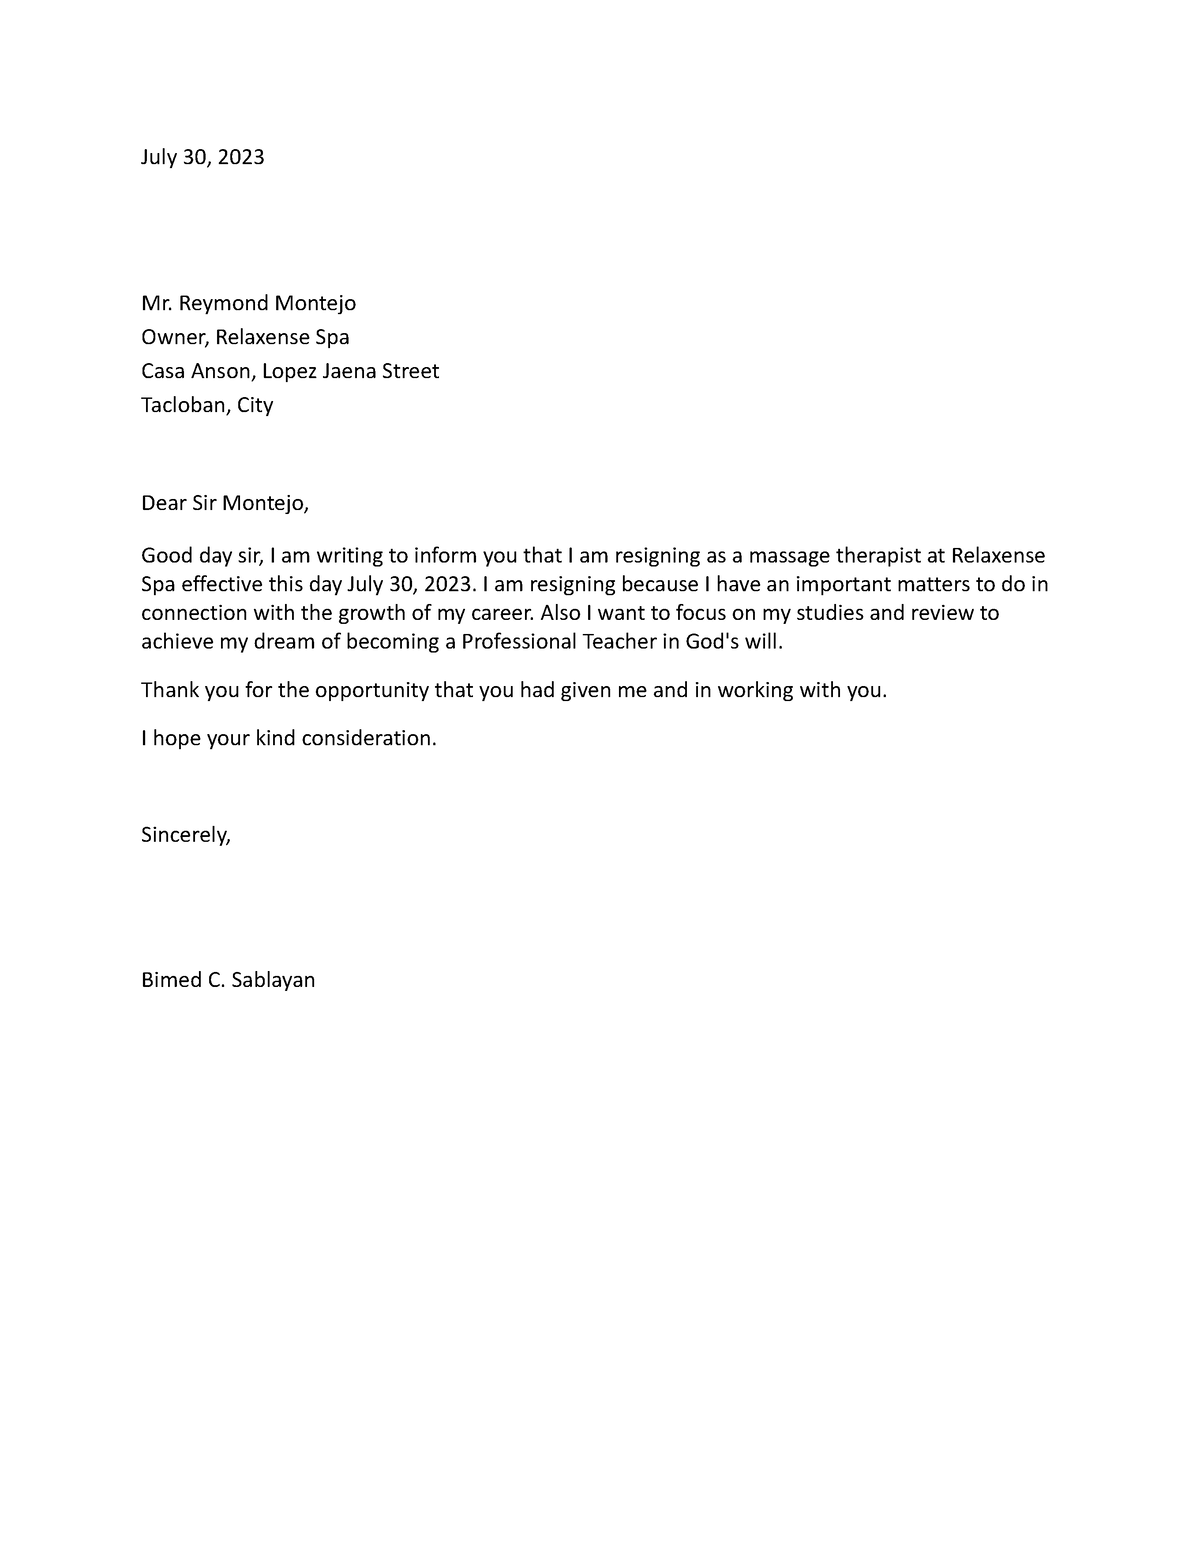 Resignation Letter - for additional information - July 30, 2023 Mr ...